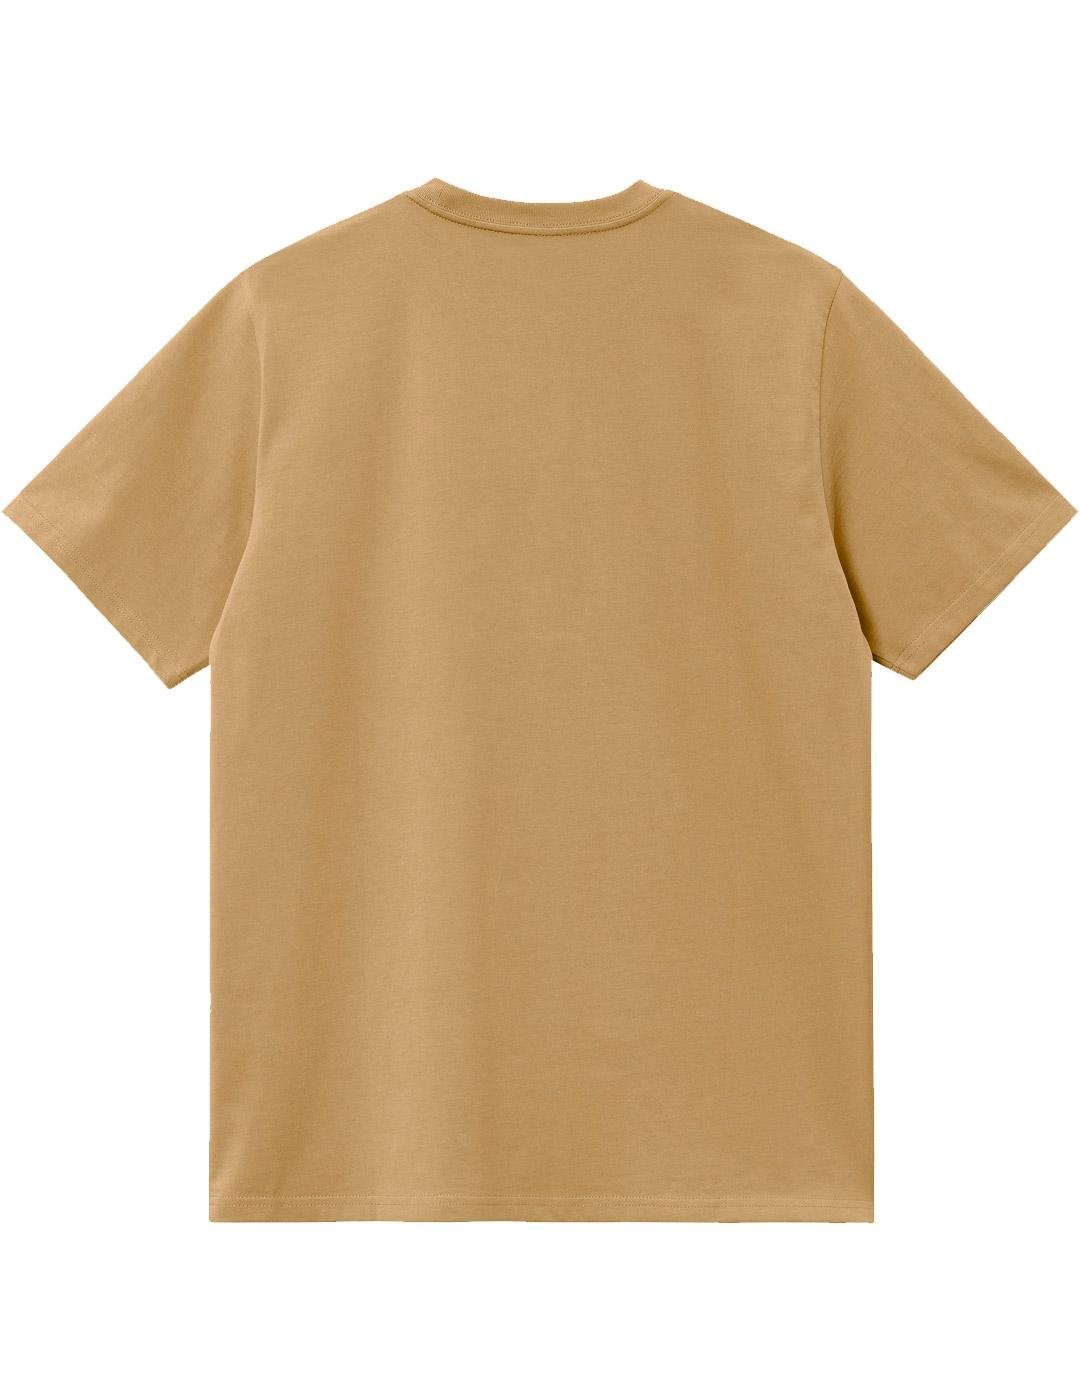 Camiseta Carhartt Wip Pocket Marrón